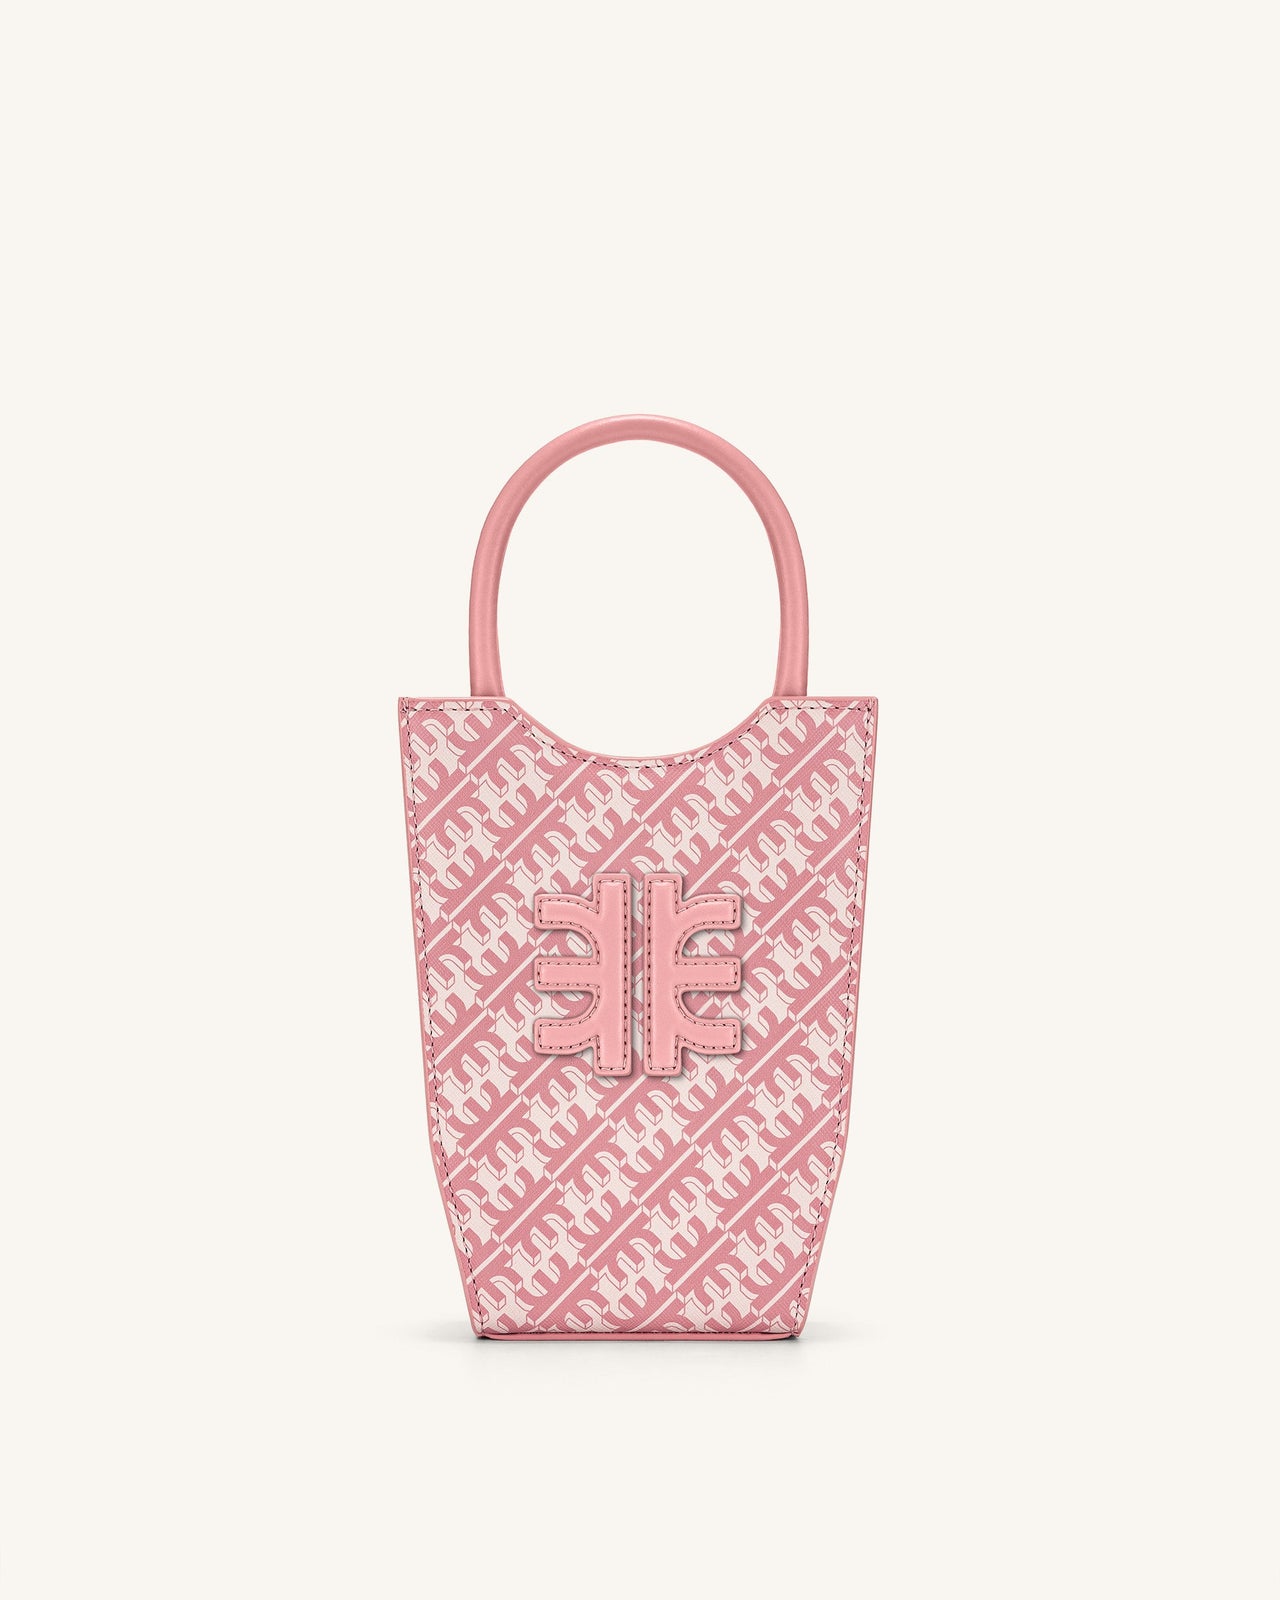 FEI 手機包- 珊瑚粉色